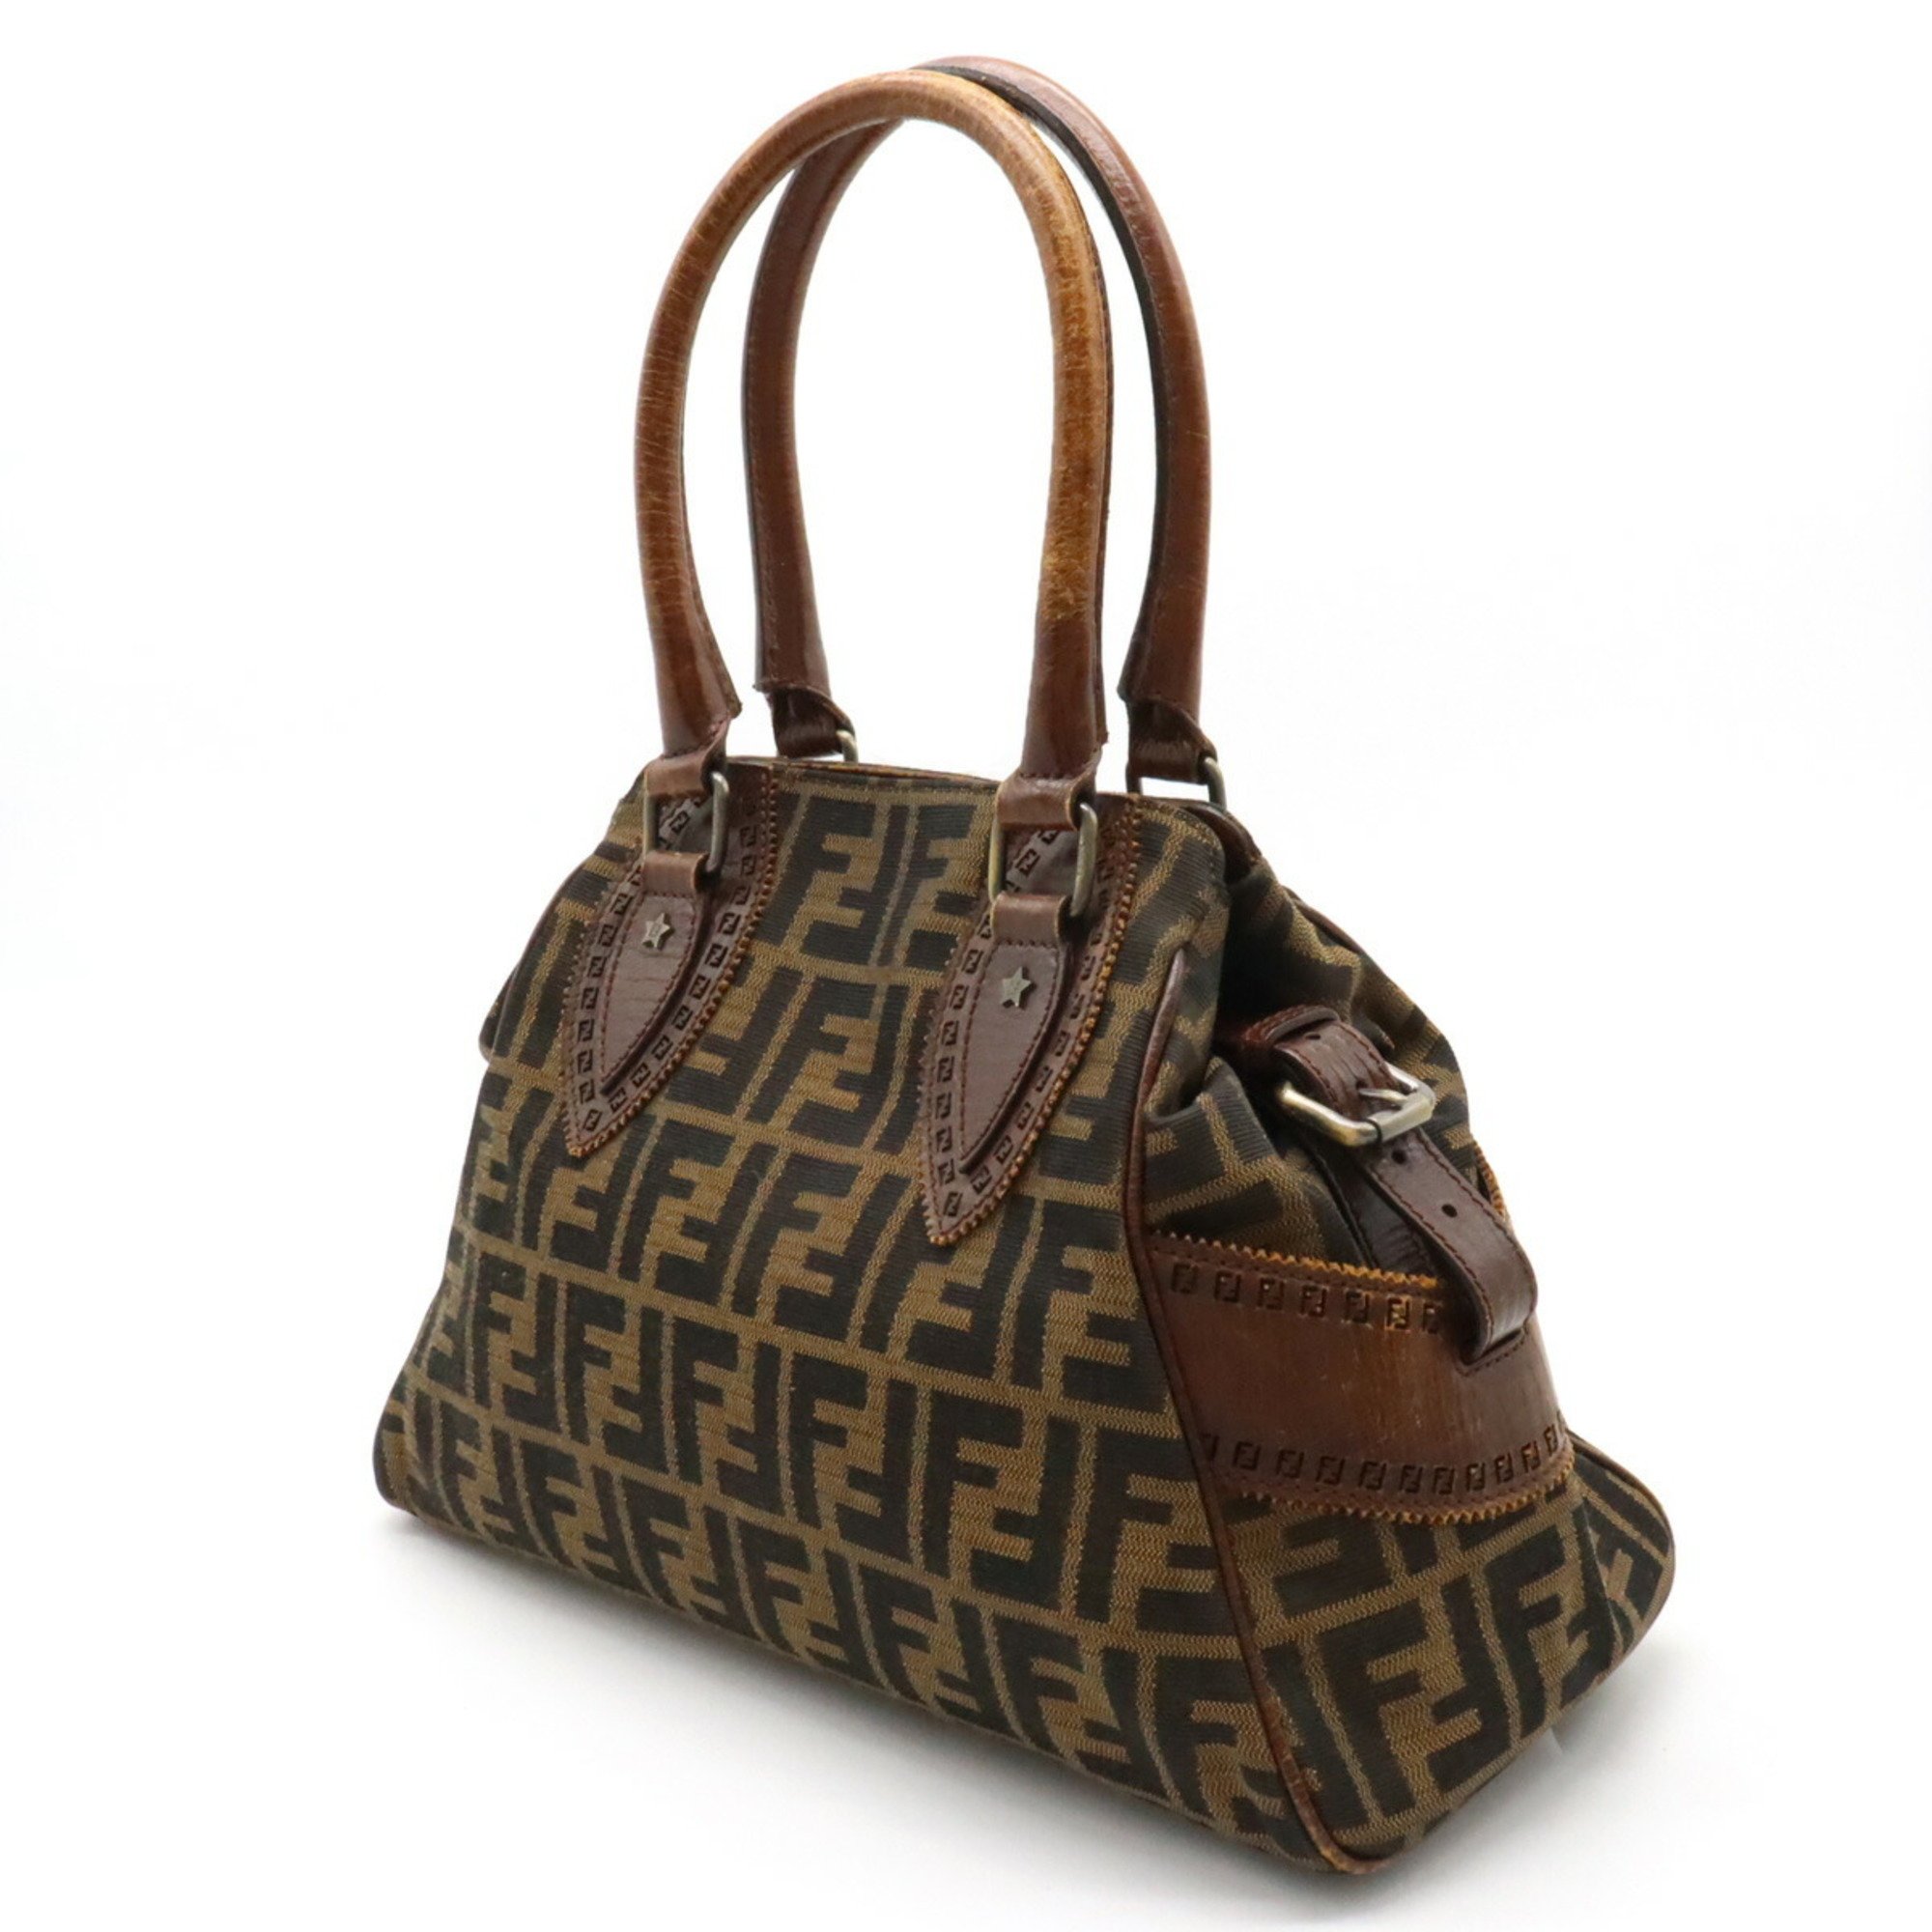 FENDI Zucca pattern Ethnico handbag tote bag nylon canvas leather khaki dark brown 8BN157